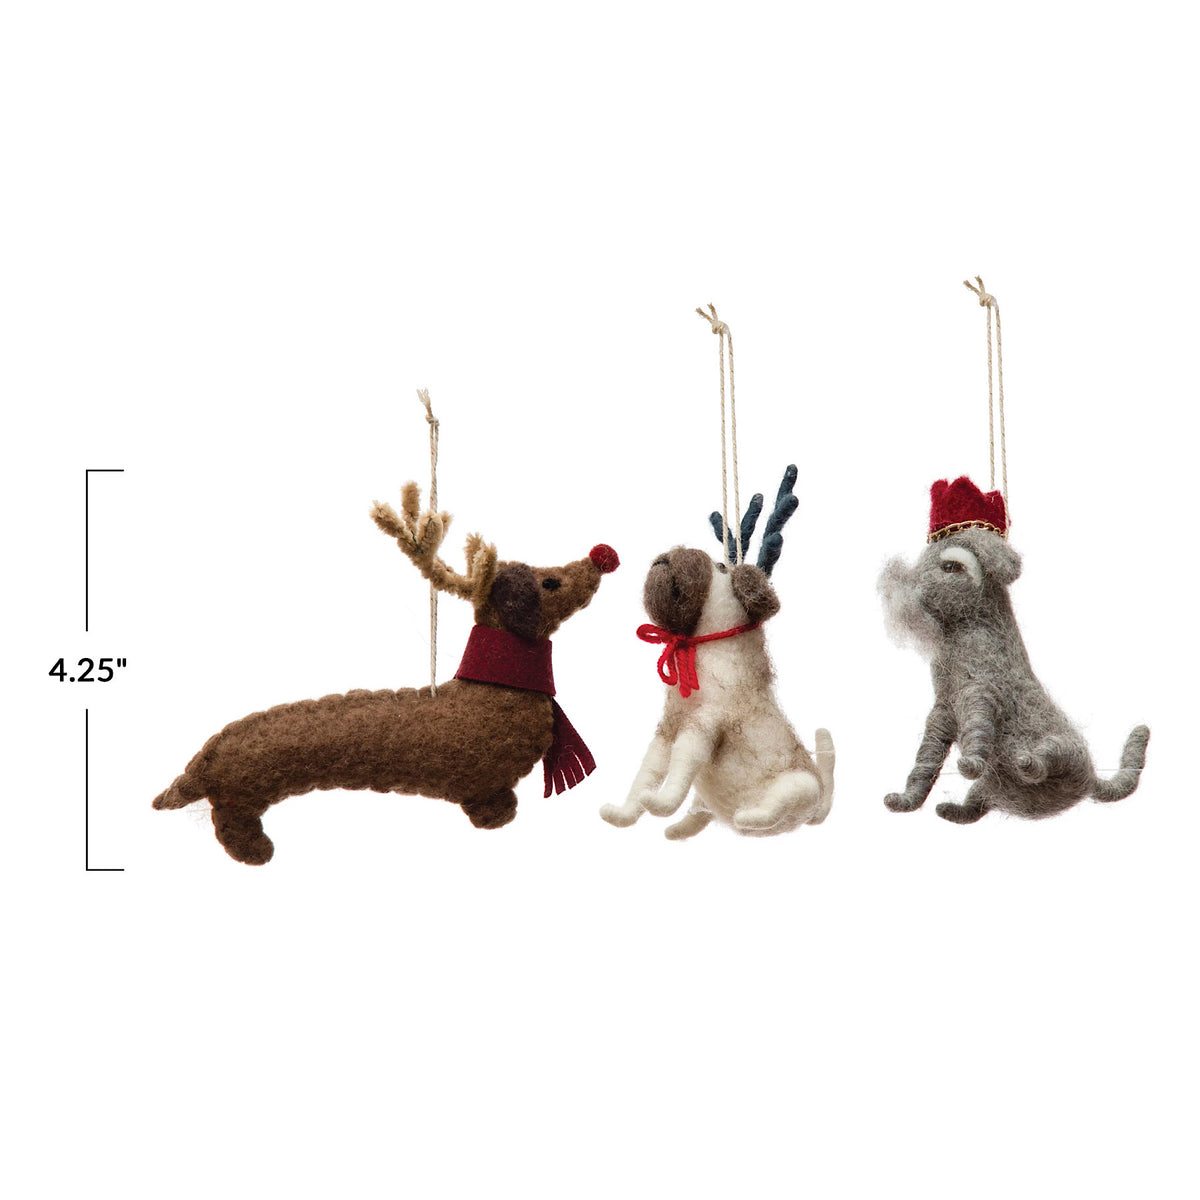 Wool Felt Dog Ornaments, 3 Styles